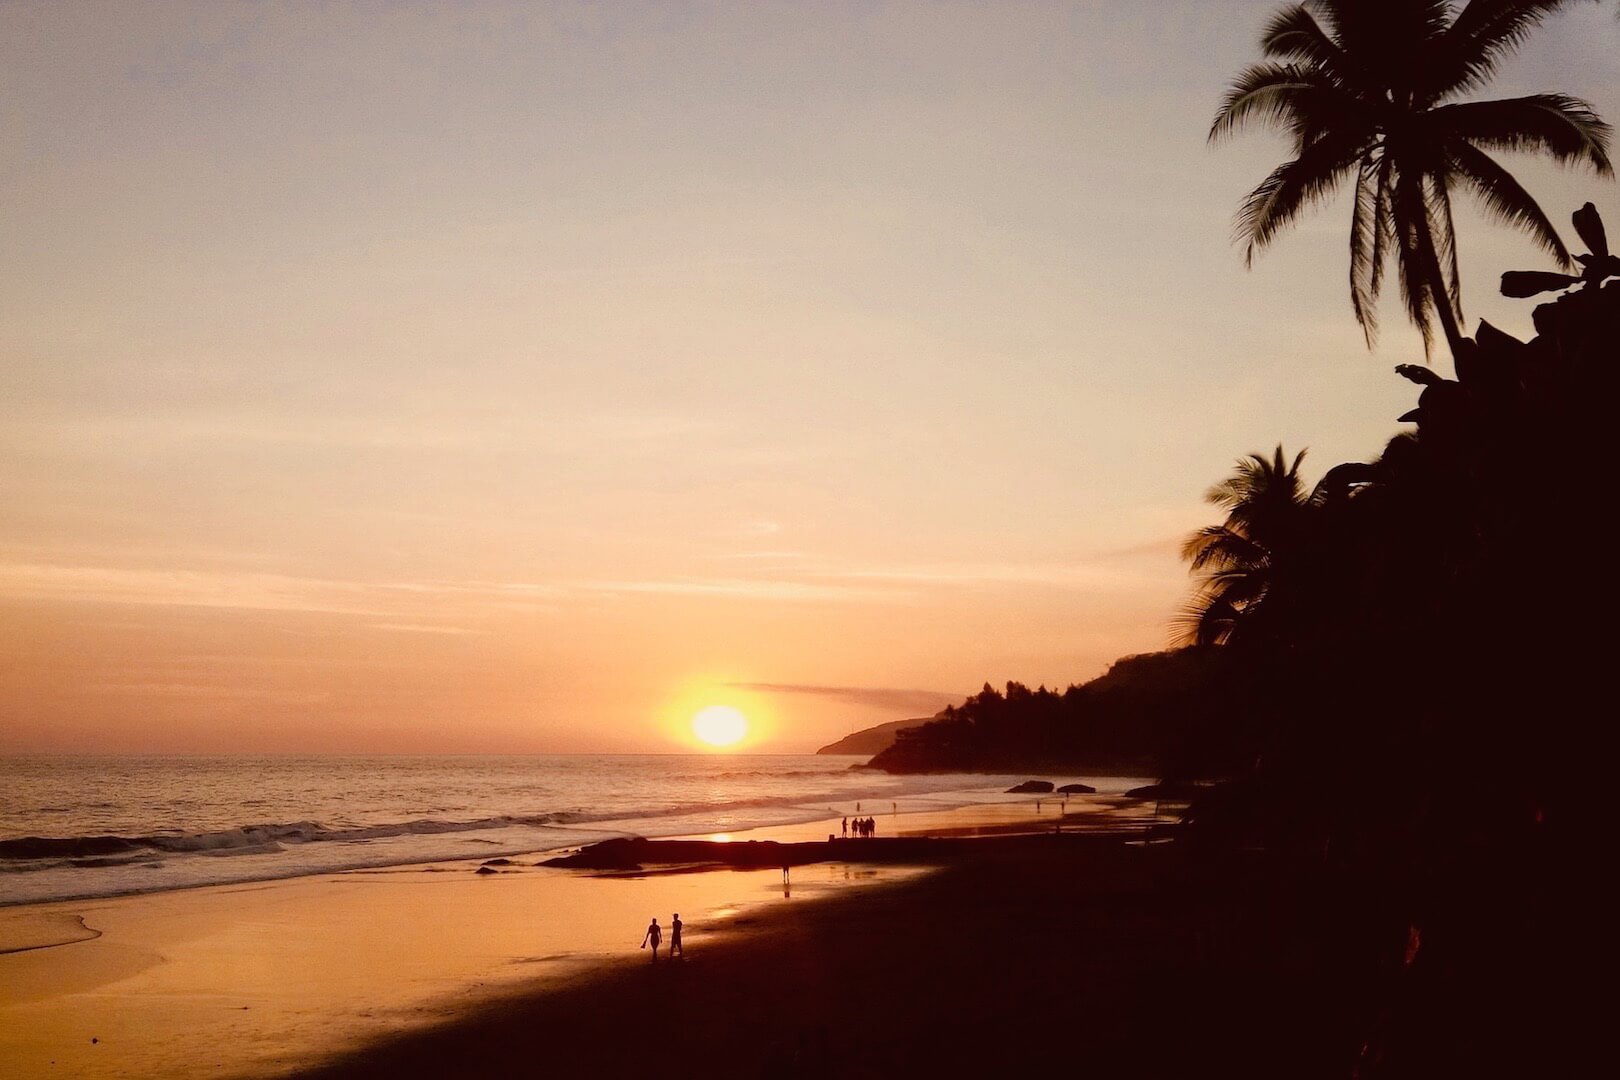 The Noriega Tapes Chapter 01 - Costa De Miskitos Coastline Sunset